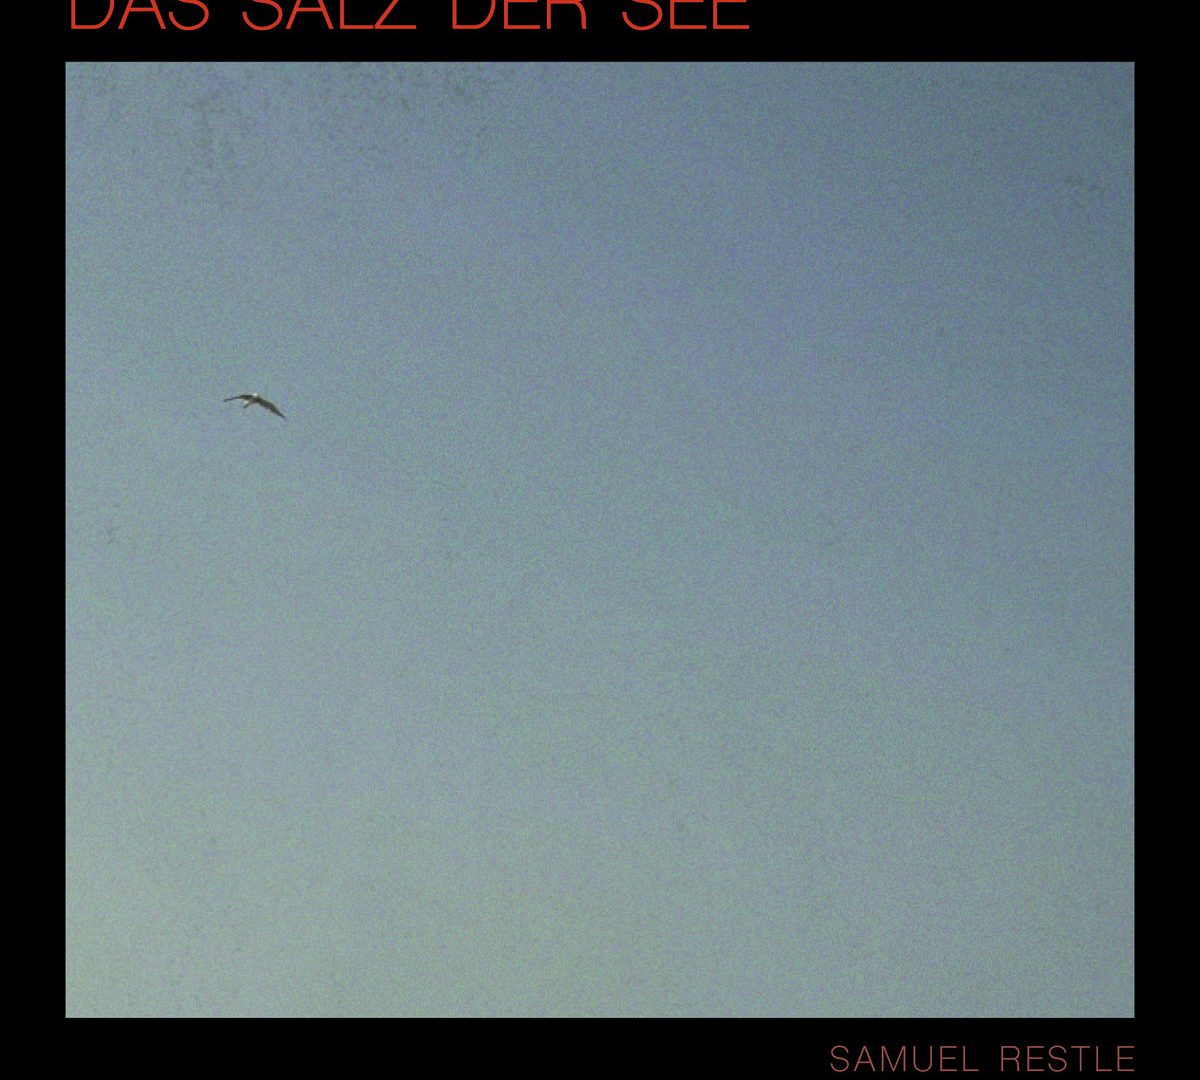 Samuel Restle Oktett, Das Salz der See, LOFT, Stefan Deistler, recording project